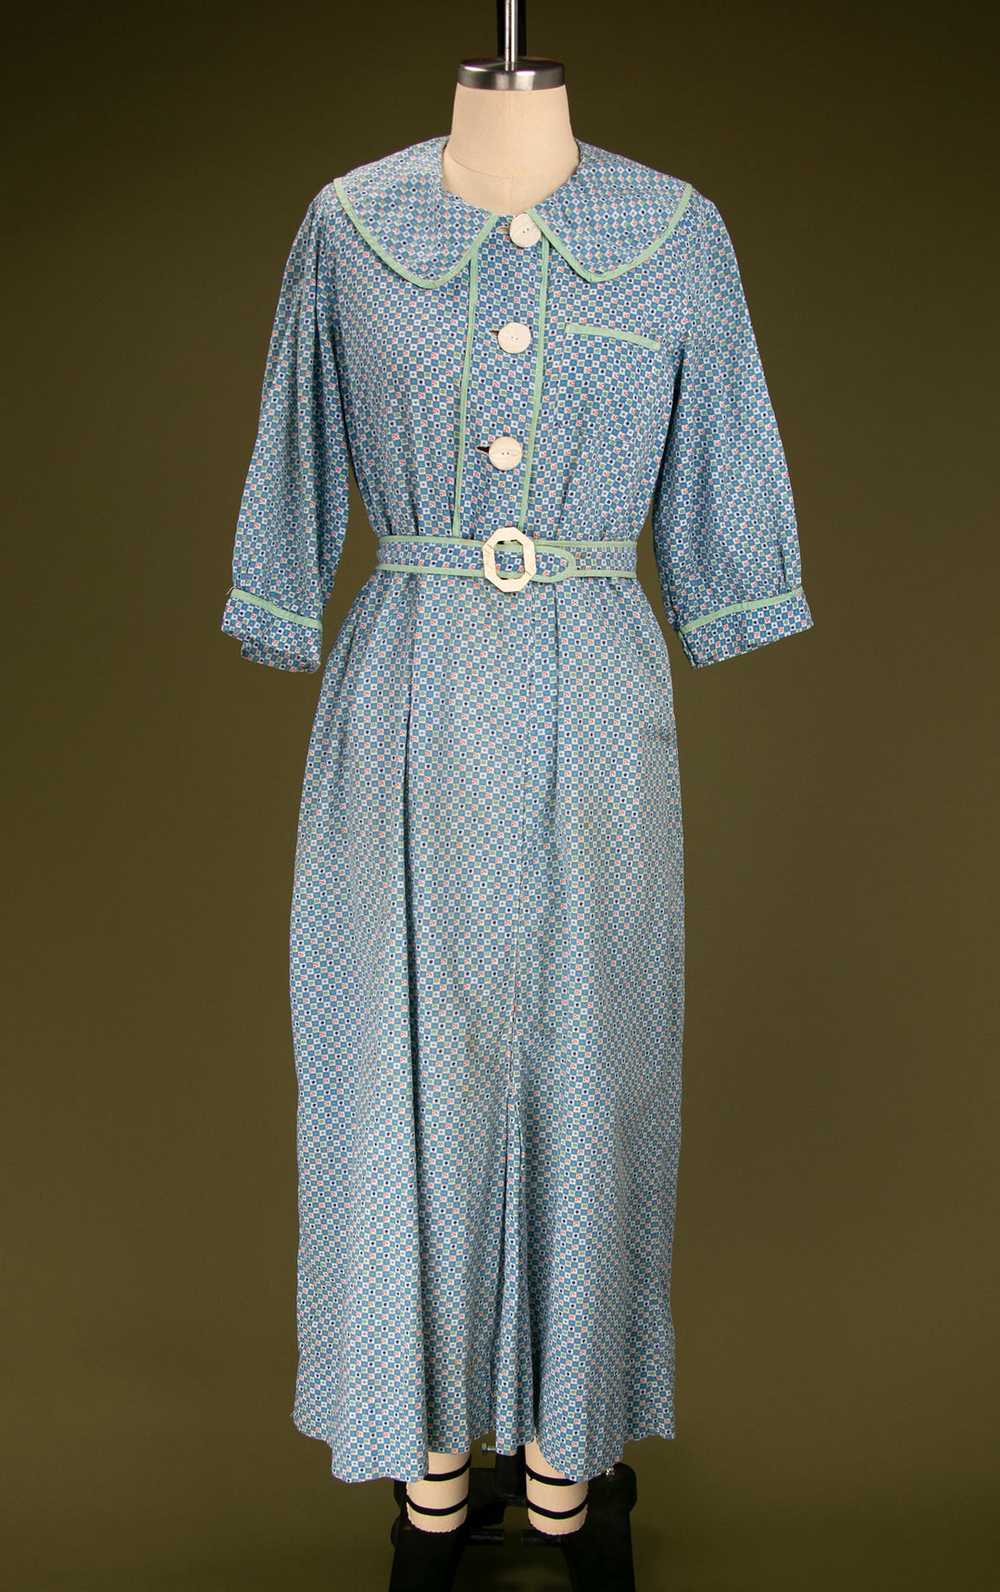 Vintage 1930's Depression Era Blue Farm Dress - image 1